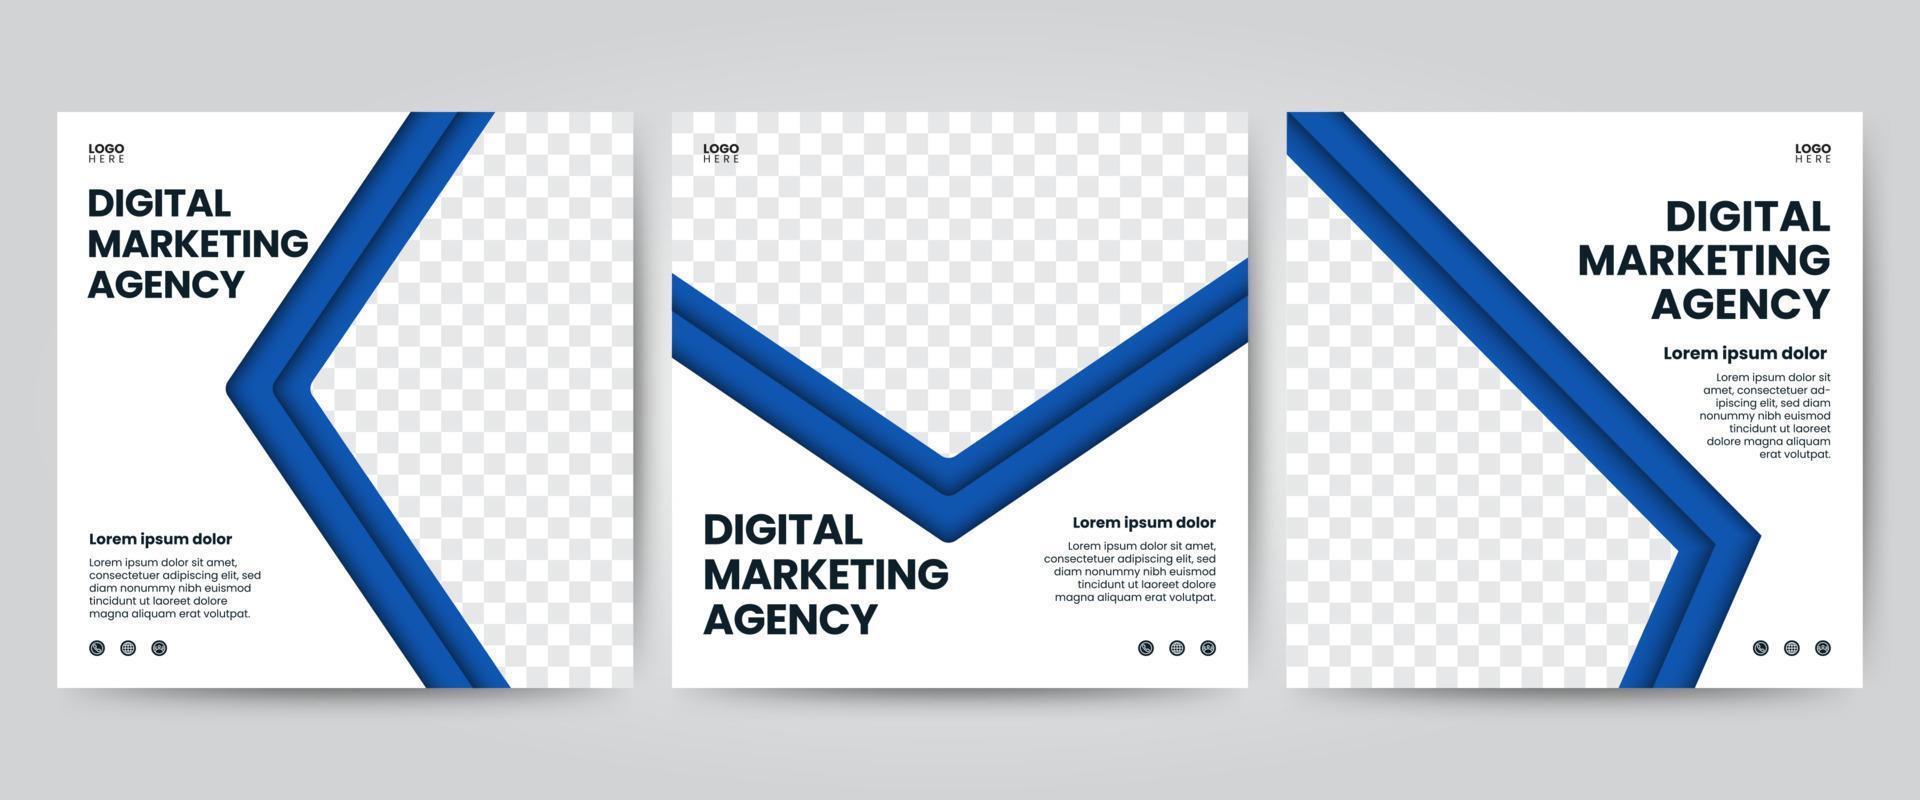 Digital marketing agency banner for square social media post template vector